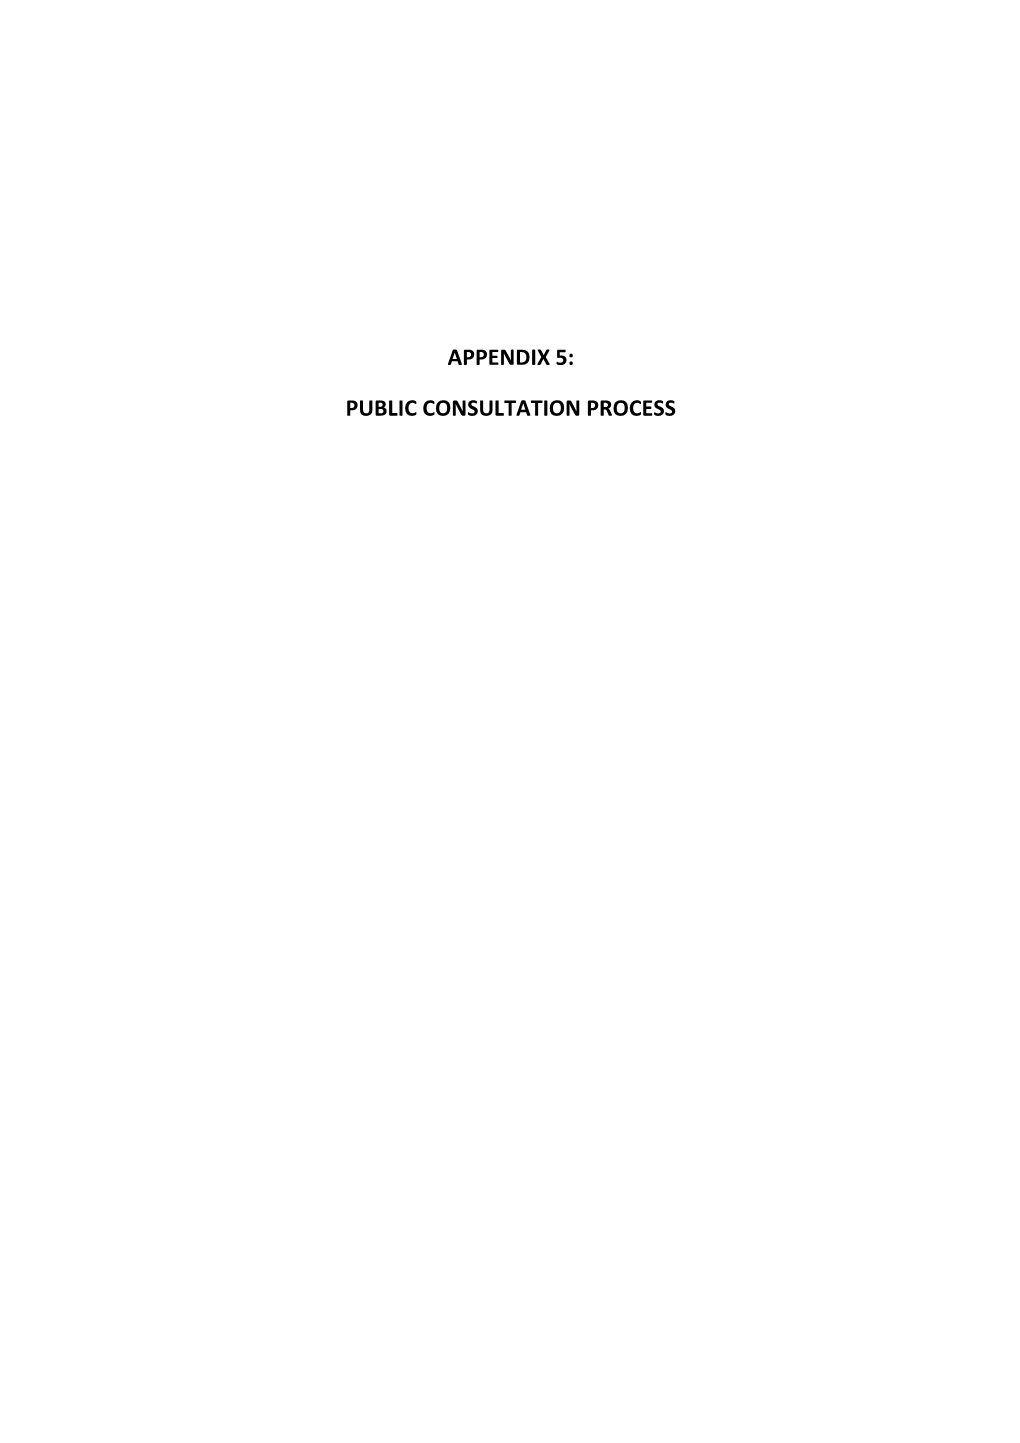 Appendix 5: Public Consultation Process